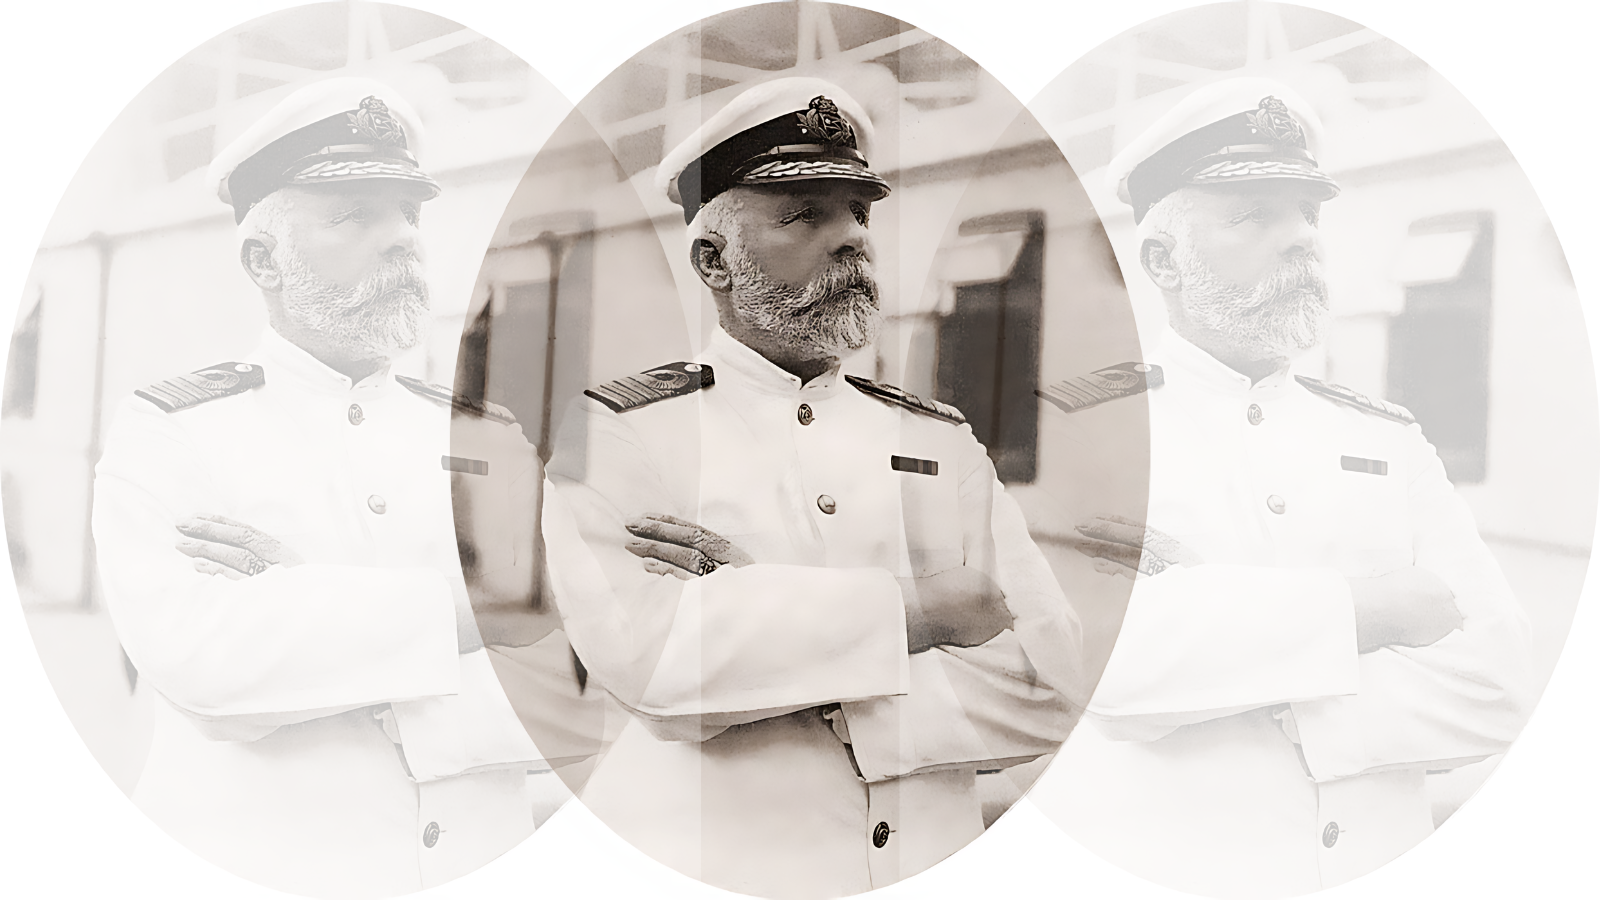 Edward Smith, captain of Titanic, in 1911